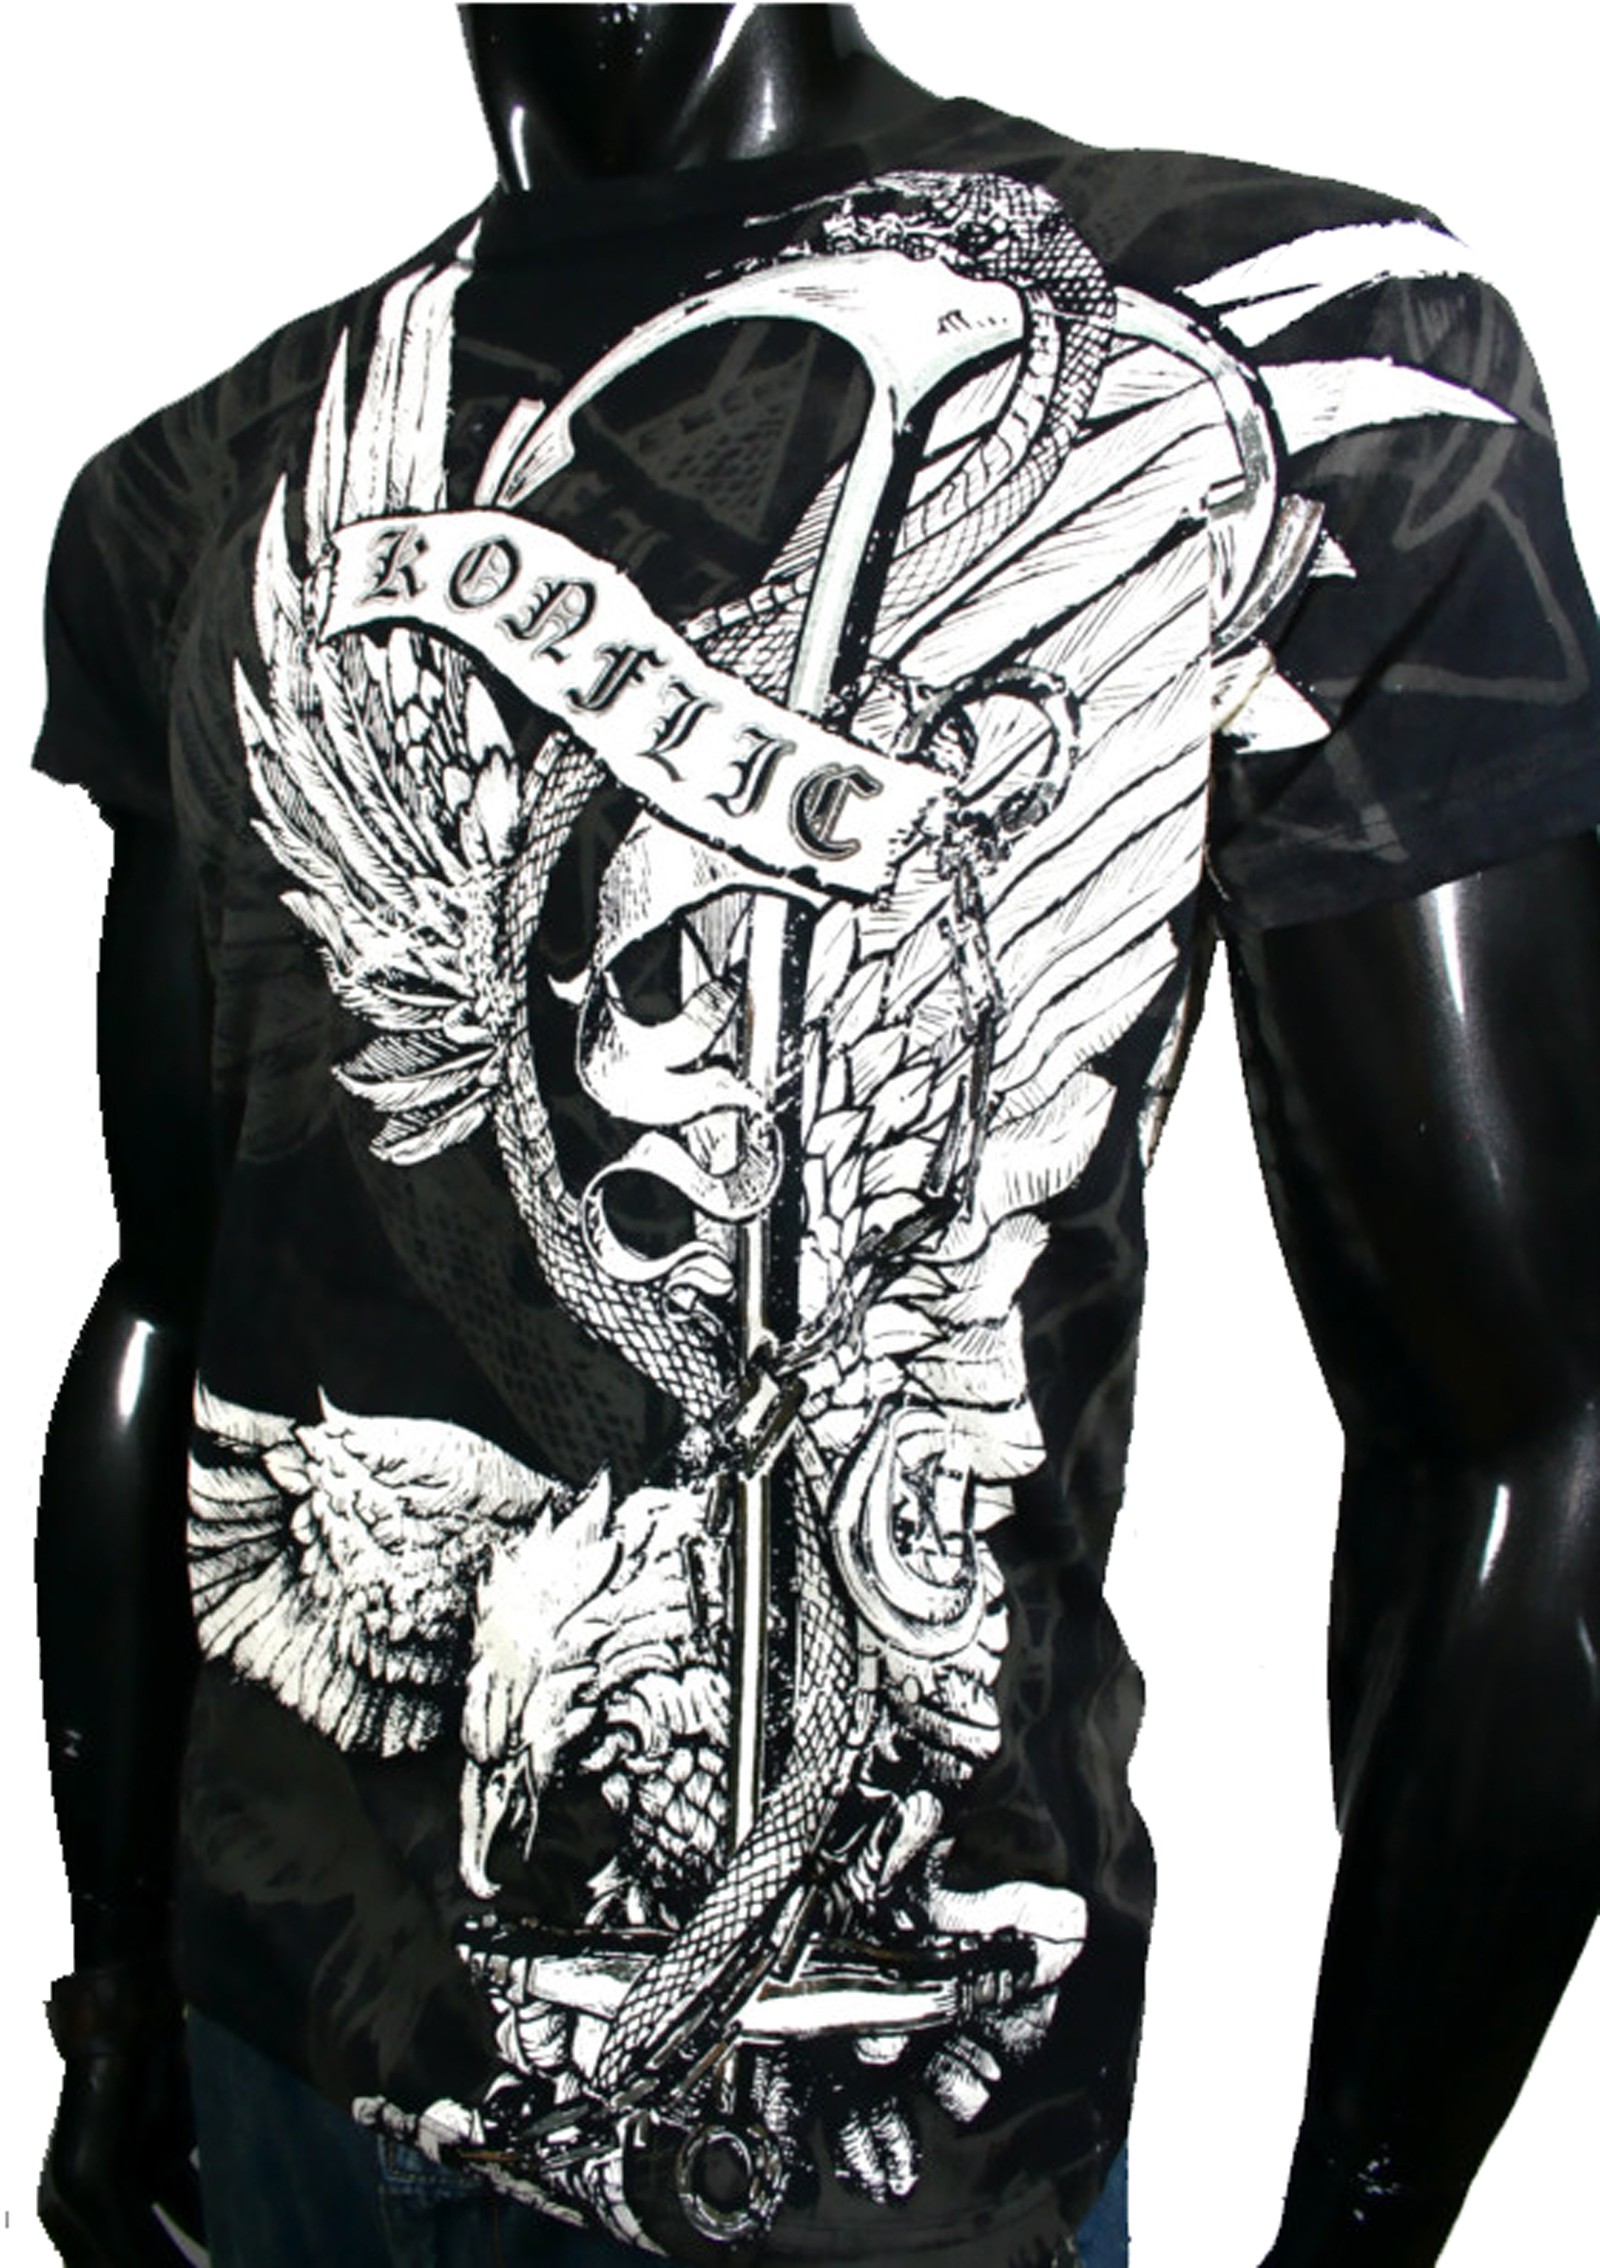 Konflic Clothing - Flight of Titans T-Shirt Front